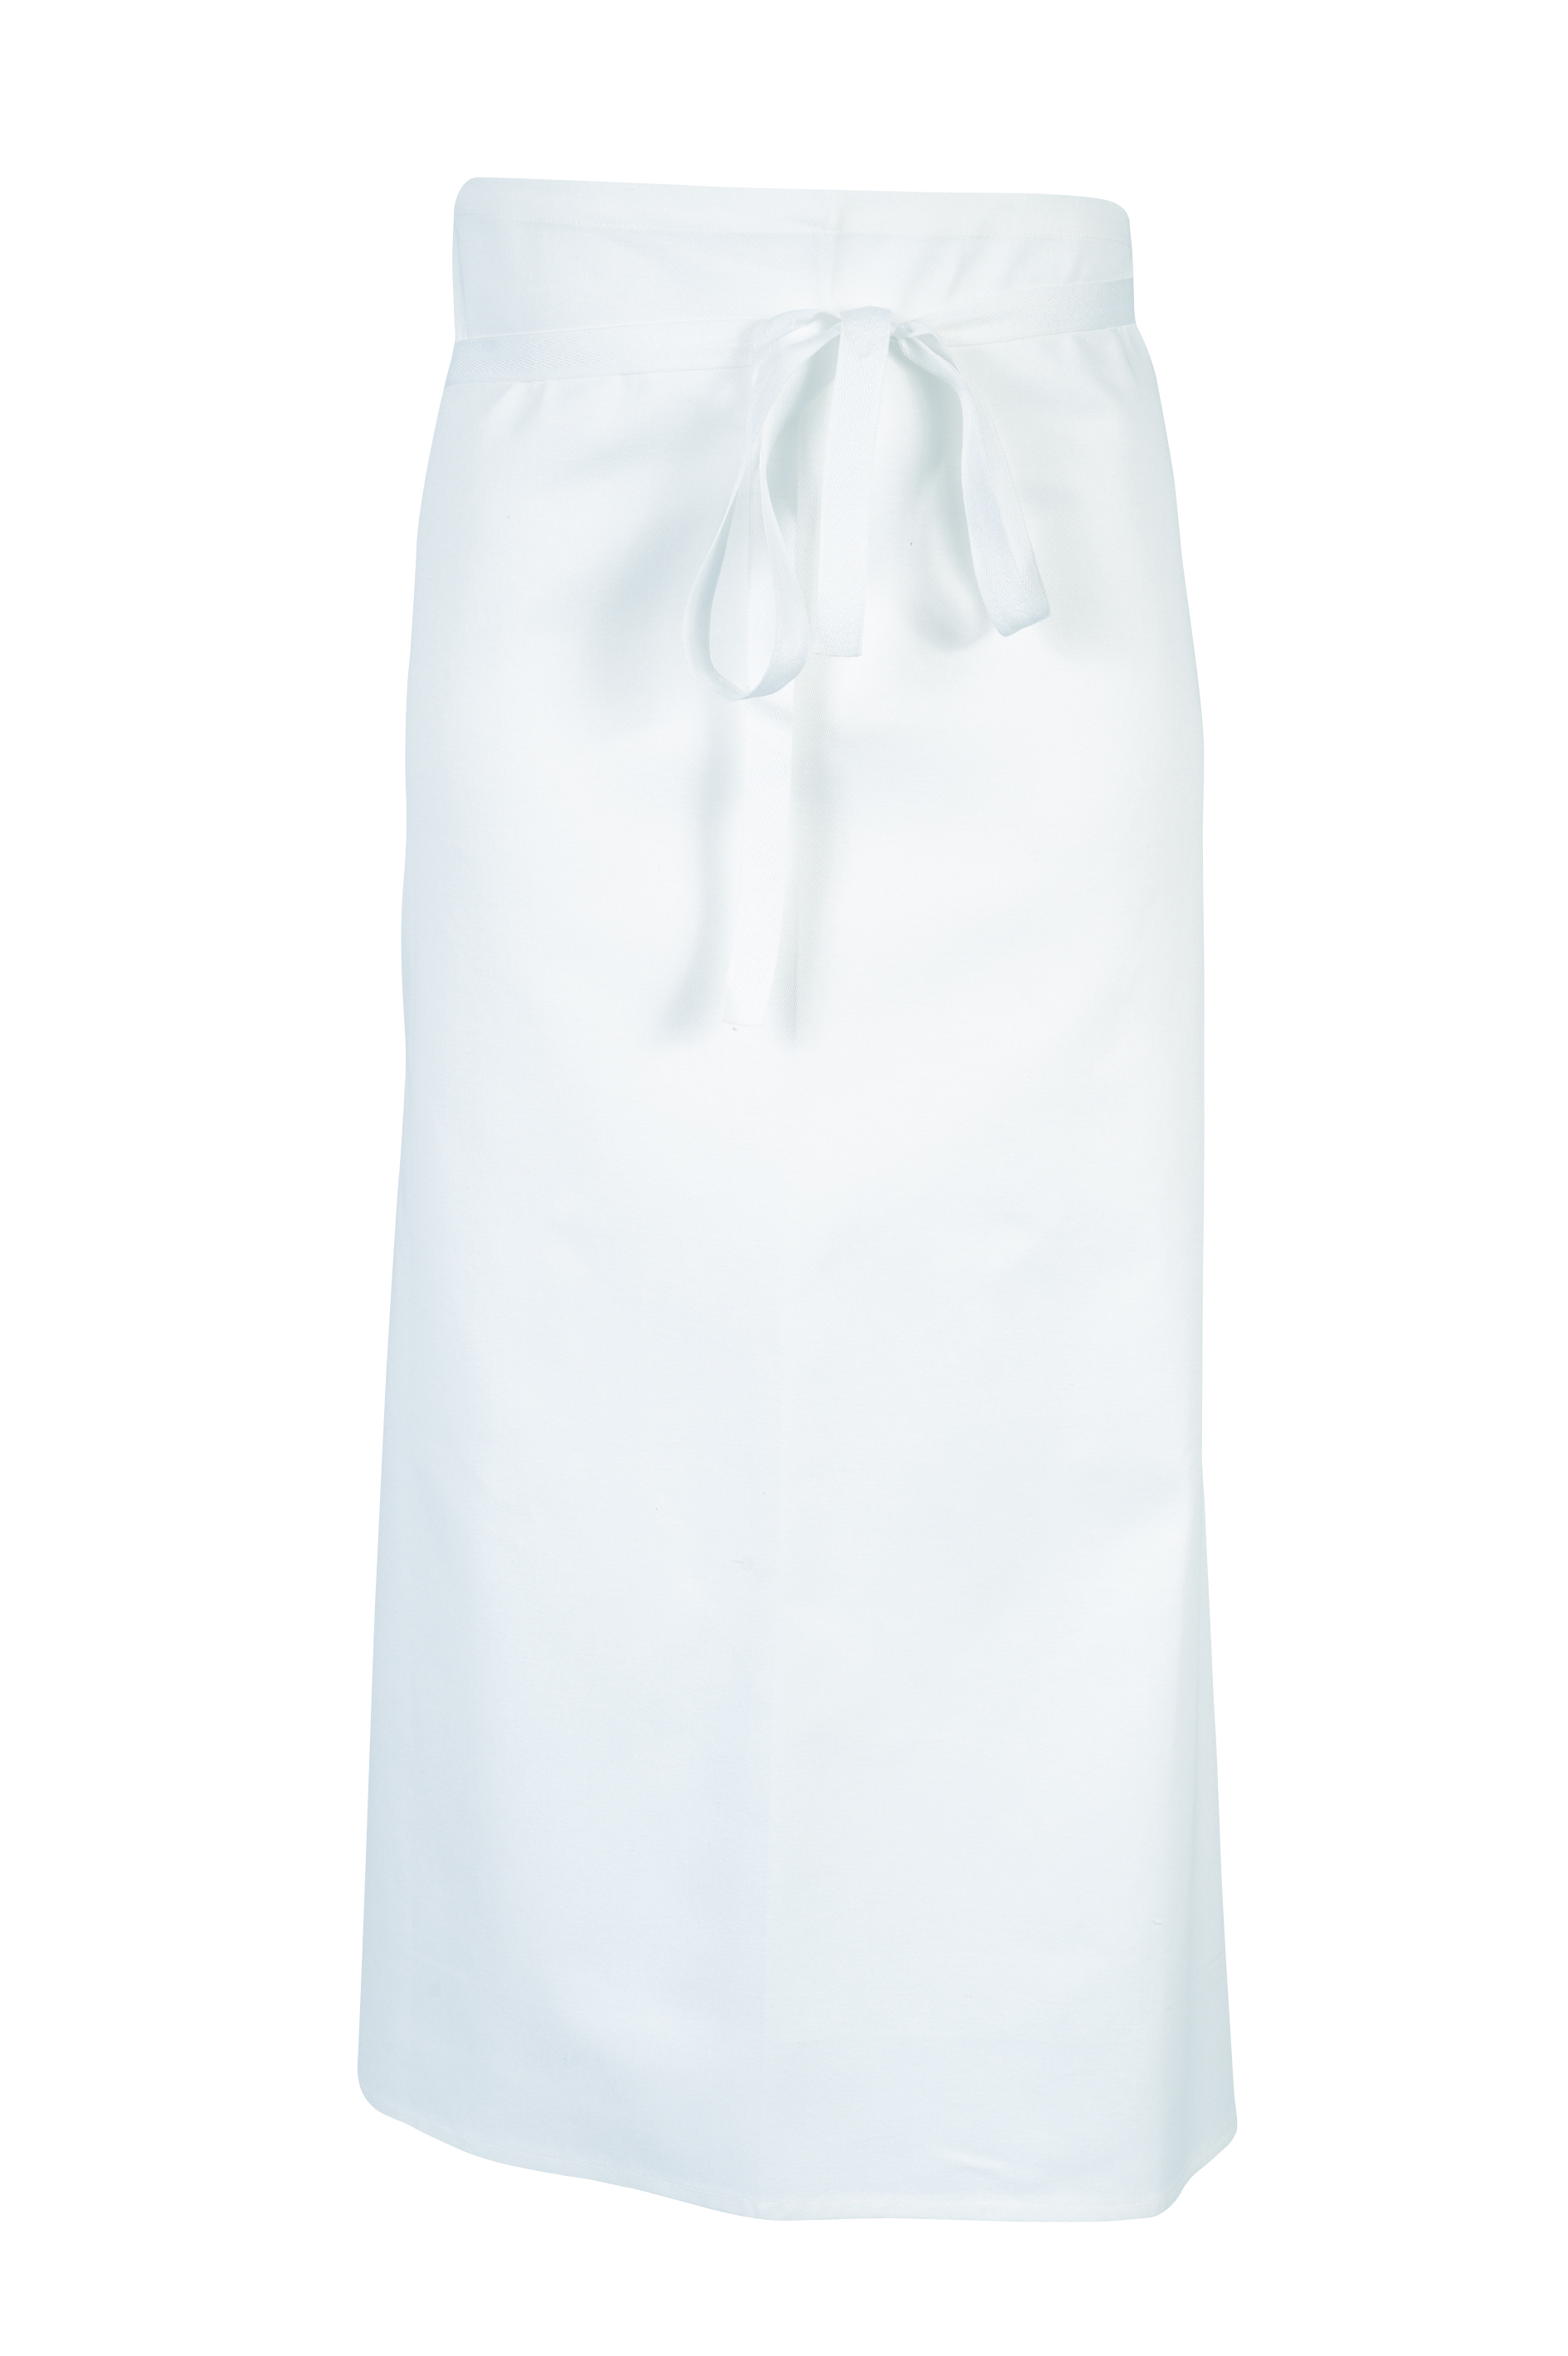 Tablier Chef en polycoton blanc  - Réf. 893010 - Illustration n°1